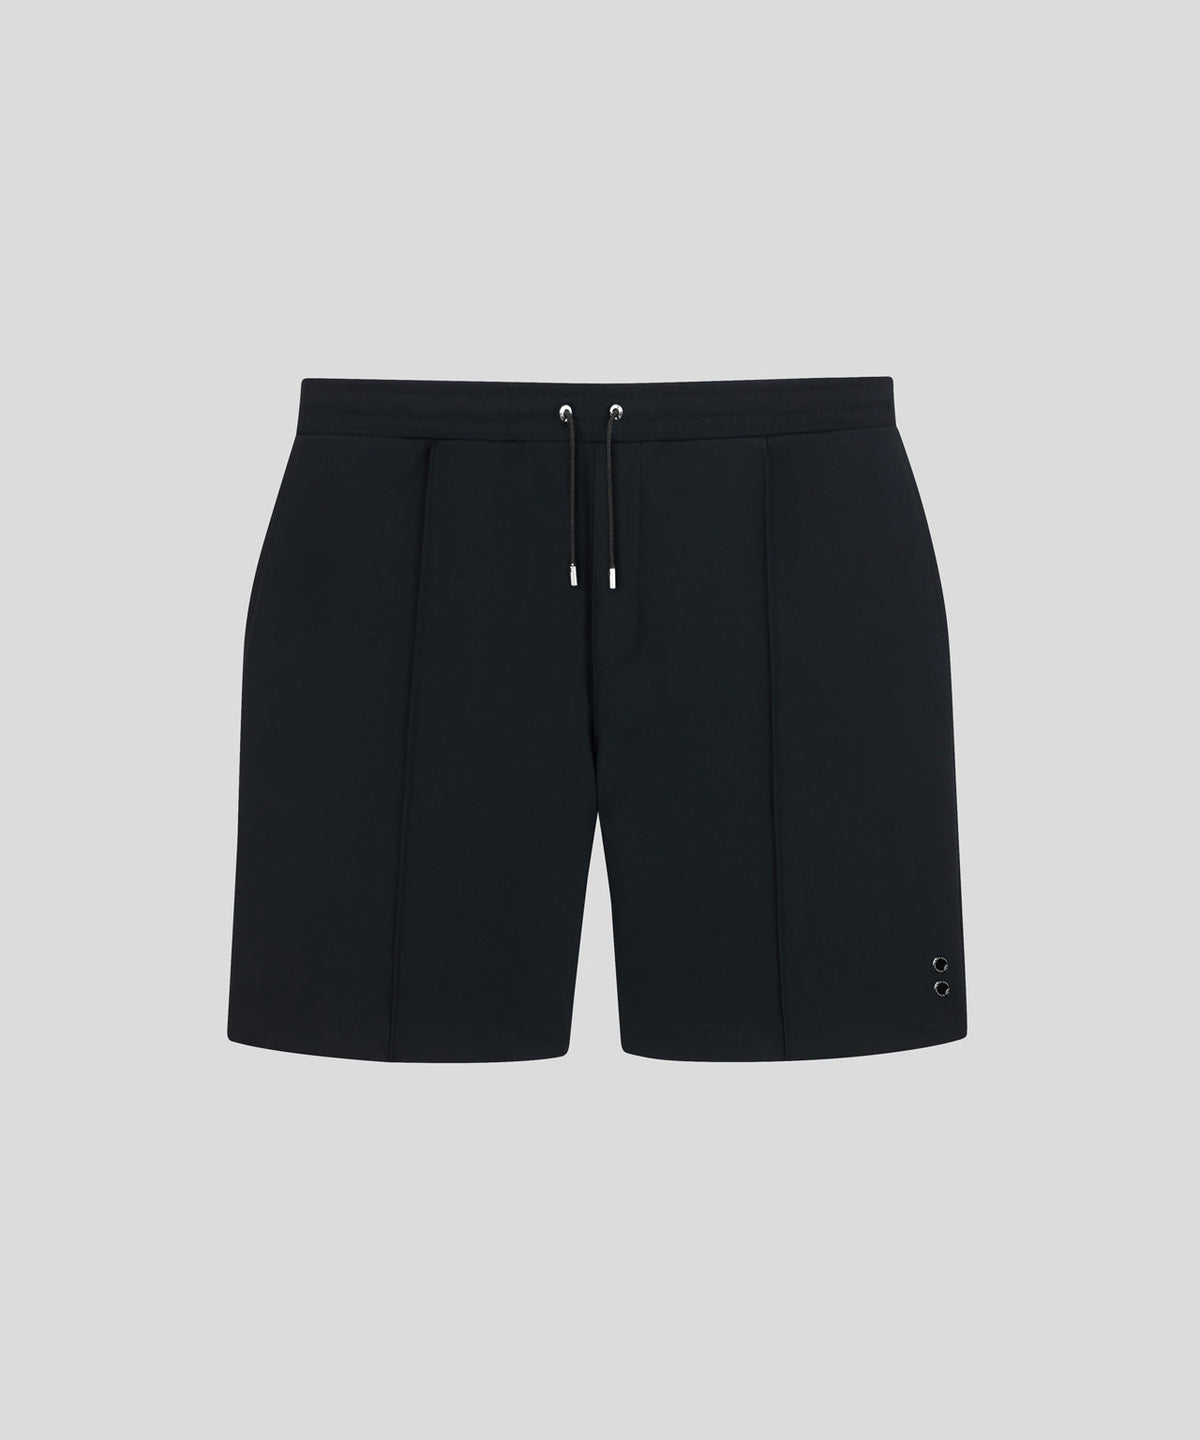 City Shorts: Black